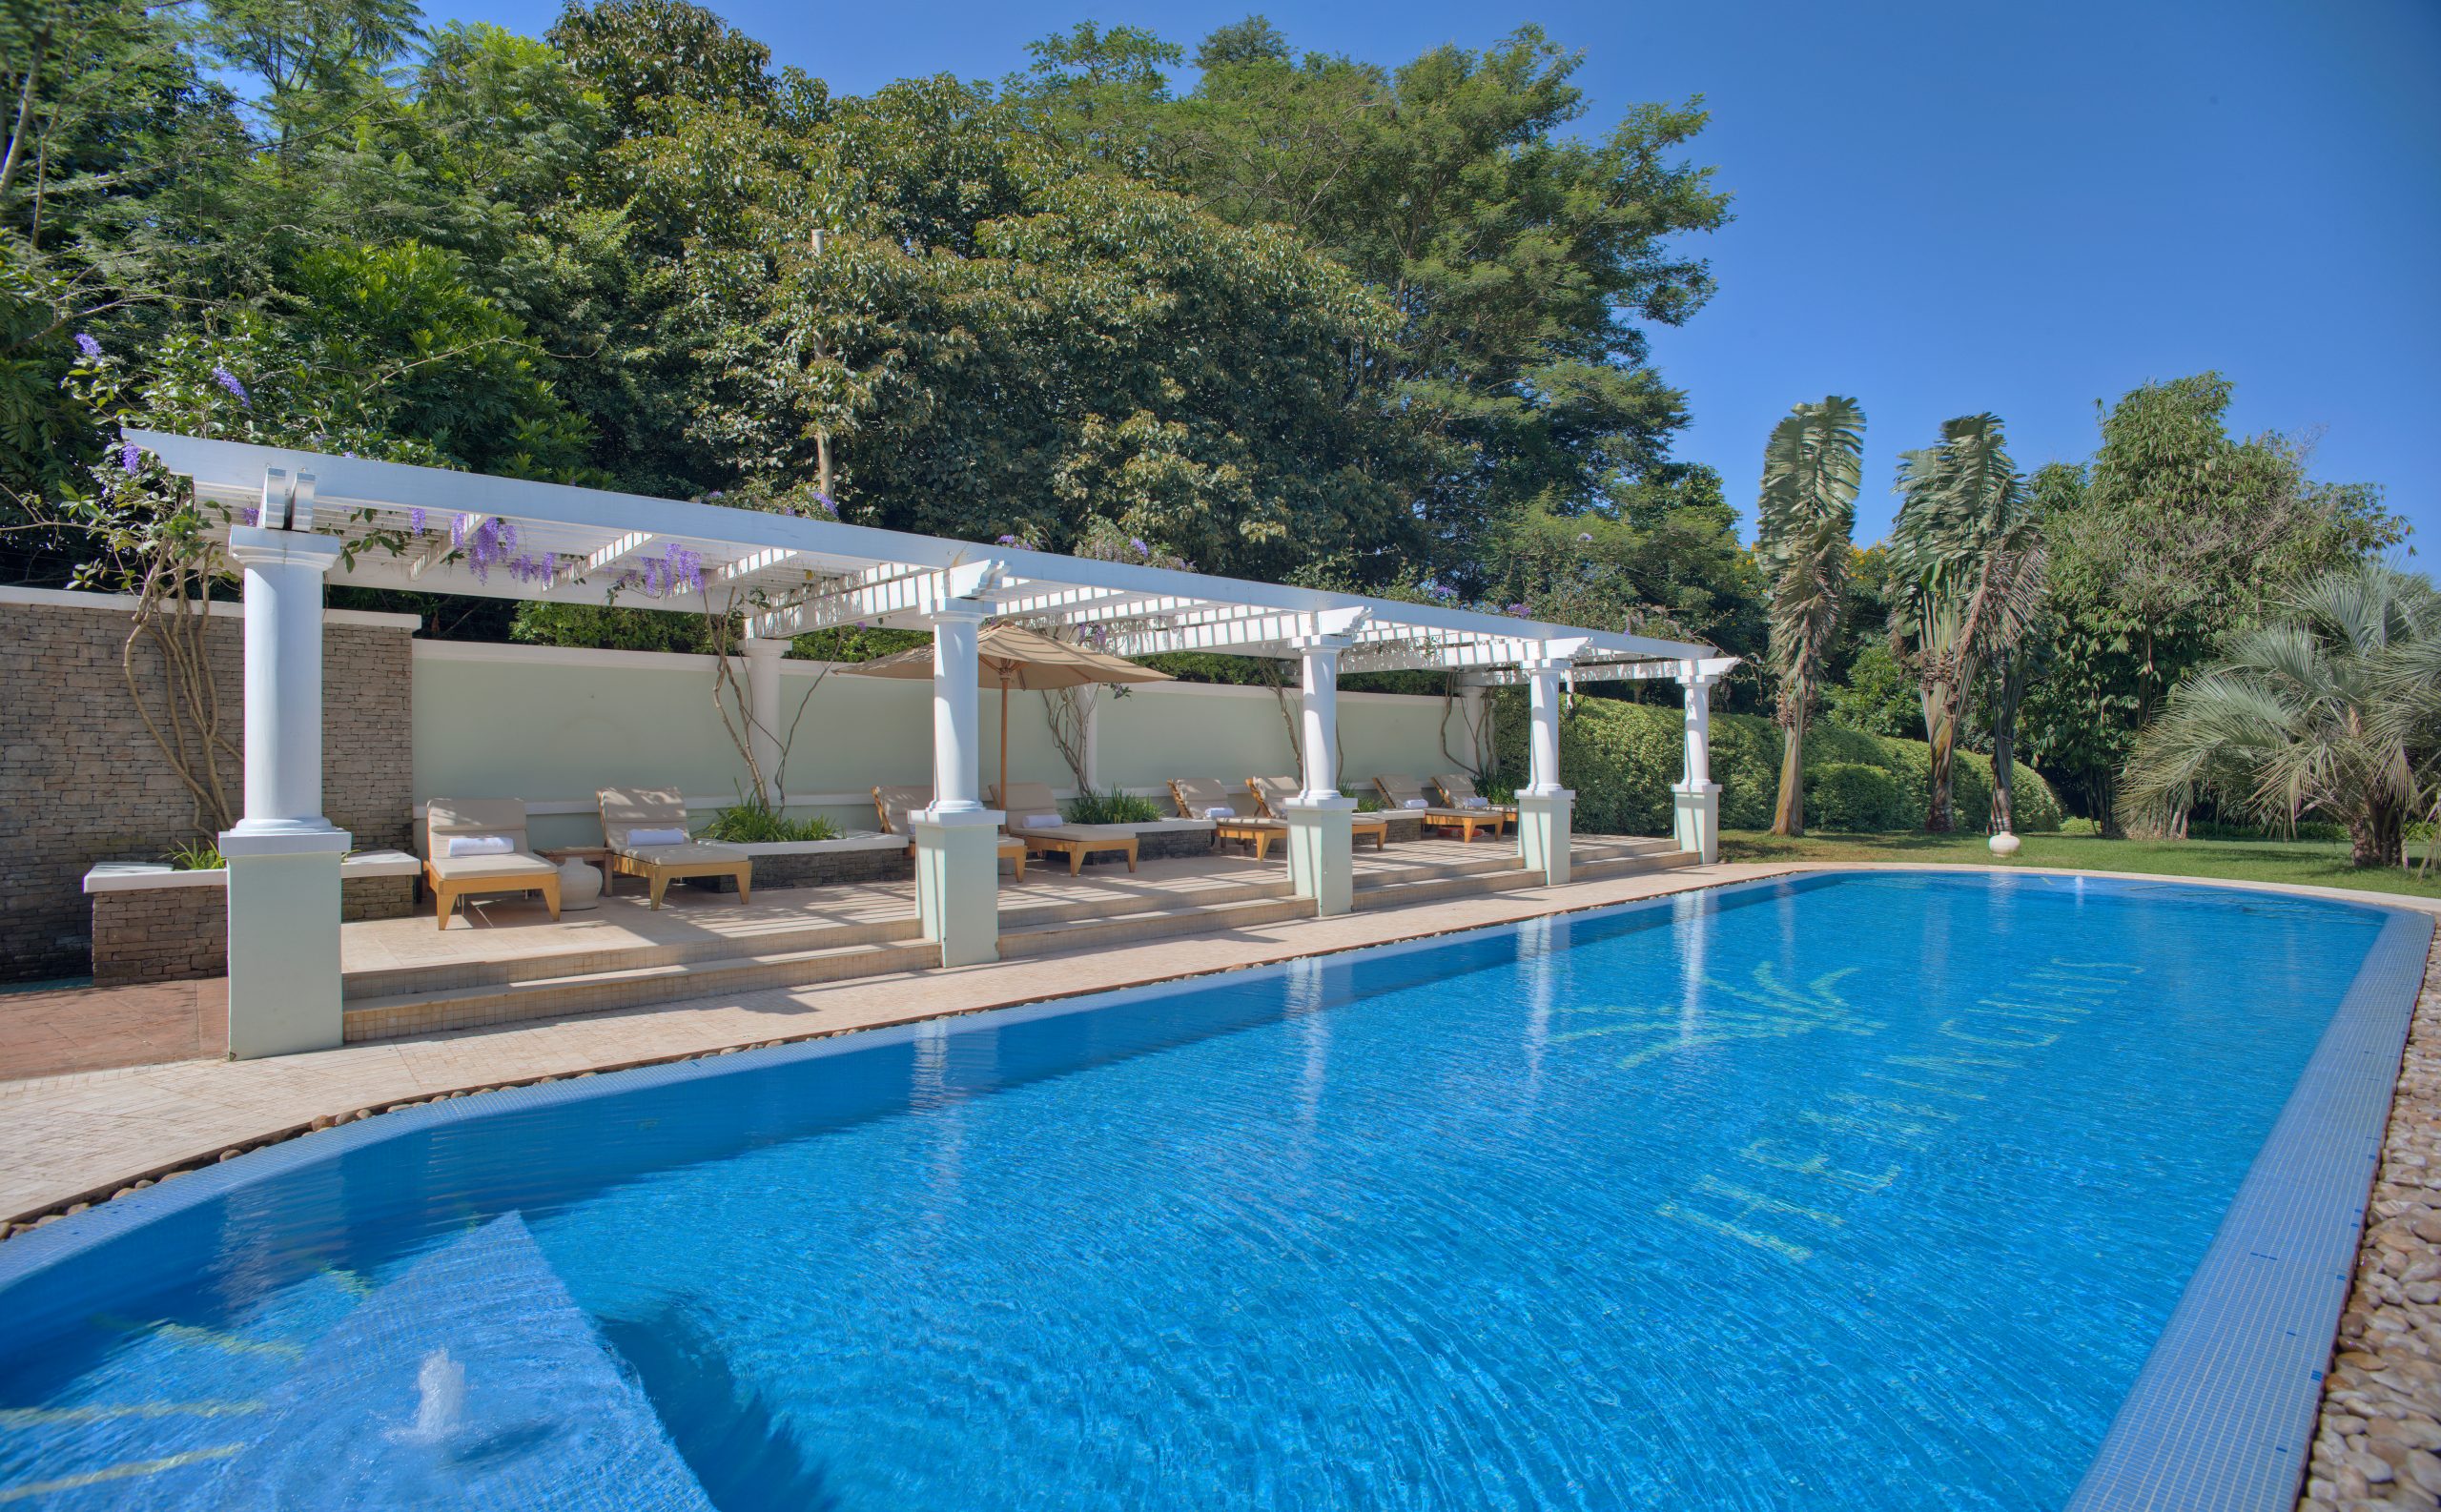 Hemingways Nairobi pool